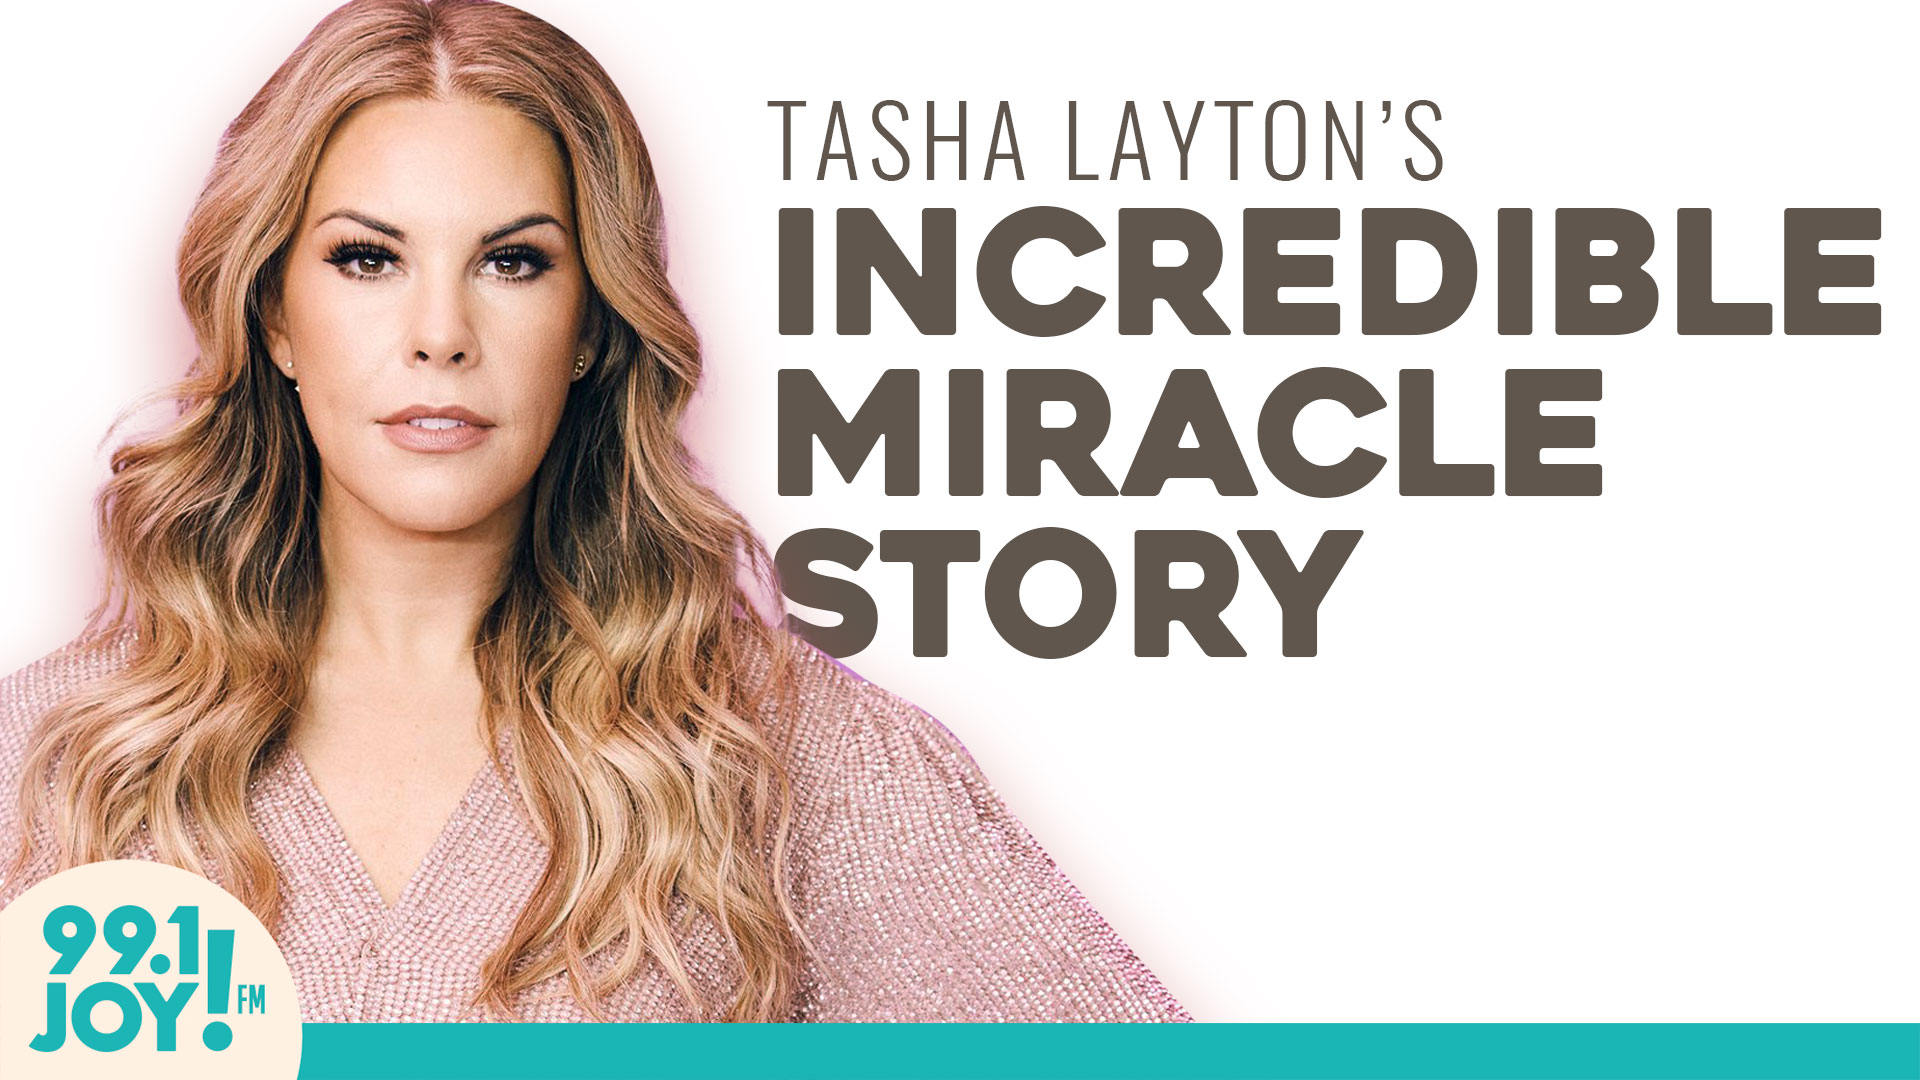 Tasha Layton opens up about her infertility battle